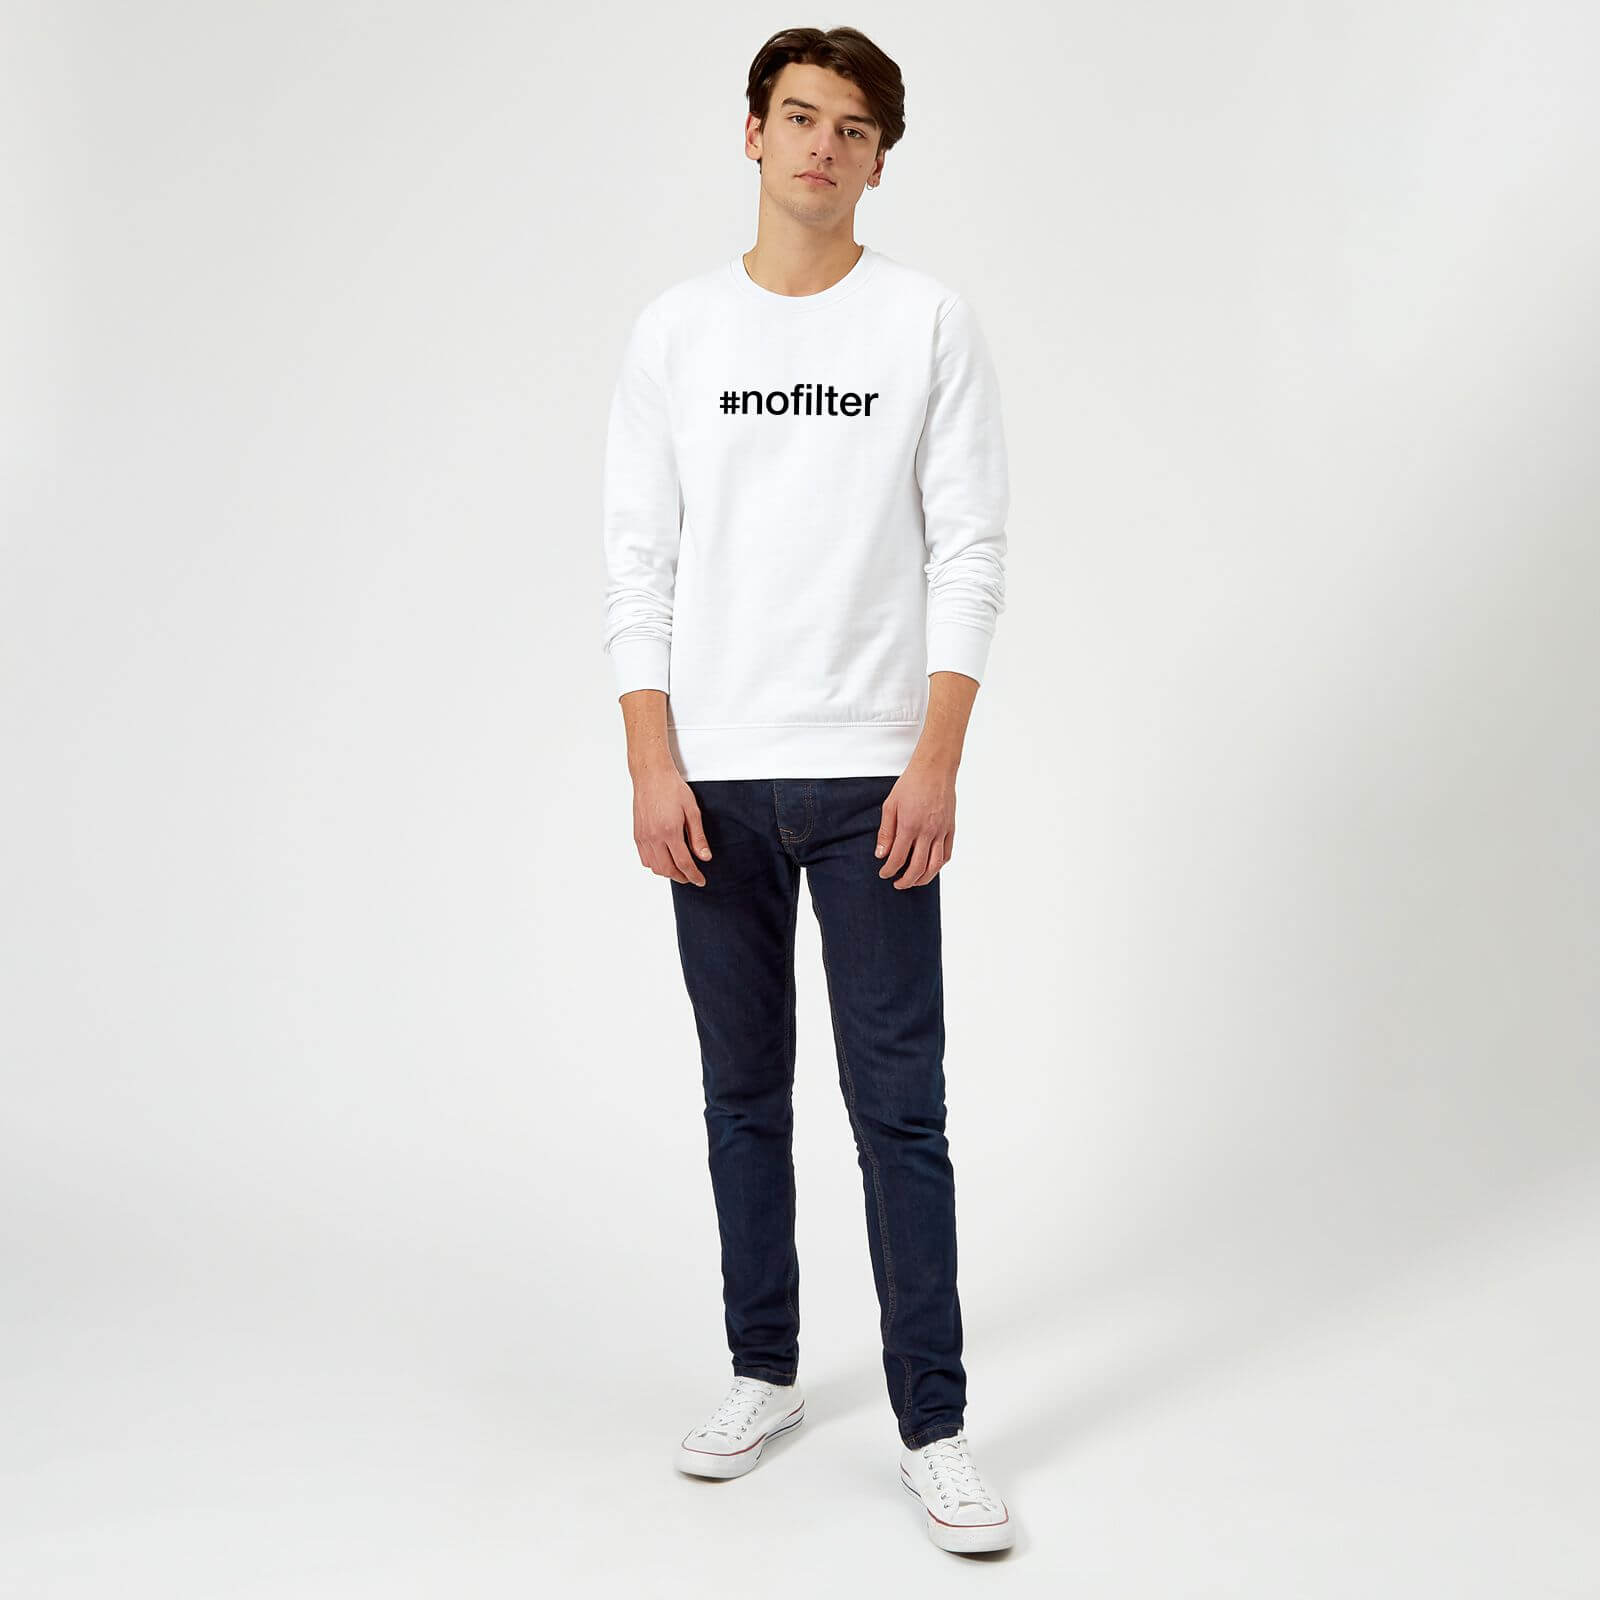 nofilter Sweatshirt - White - M - White